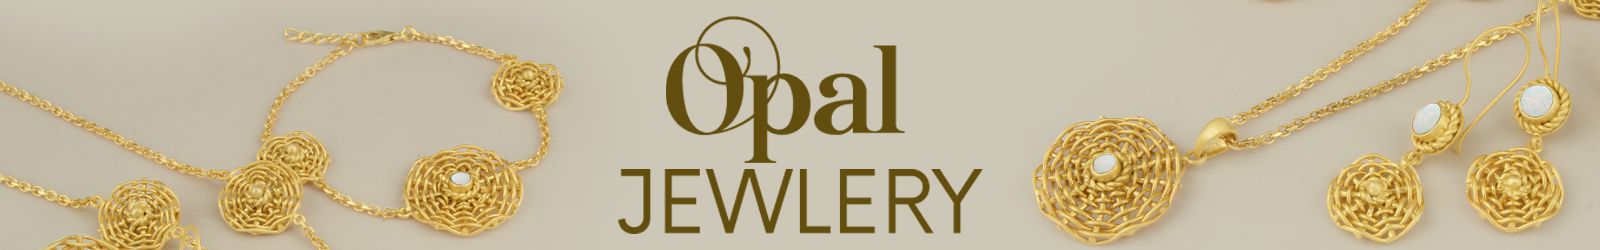 Silver Opal Jewelry Wholesale Supplier